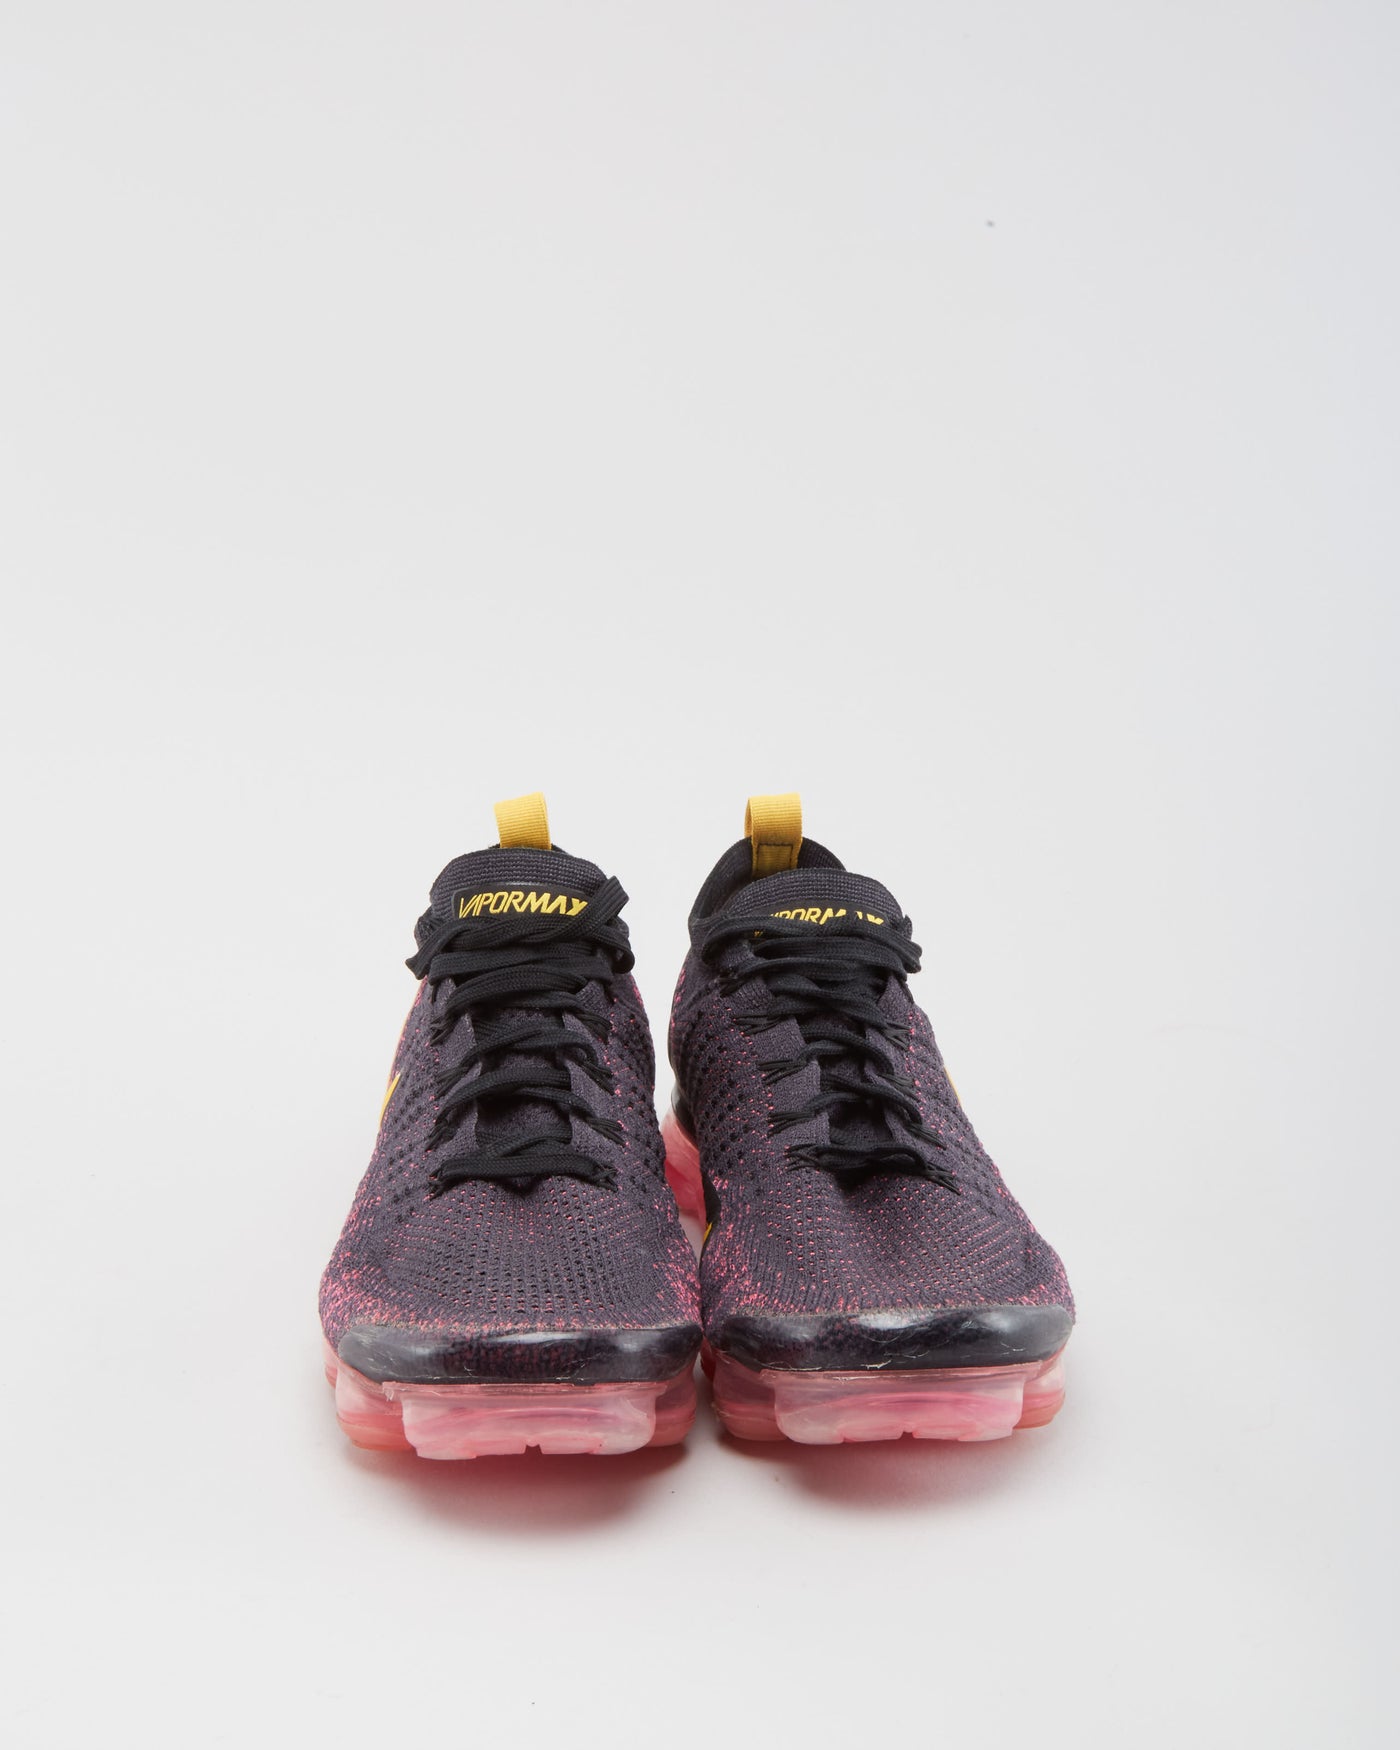 Nike Vapormax Pink / Purple / Black Trainers - UK7